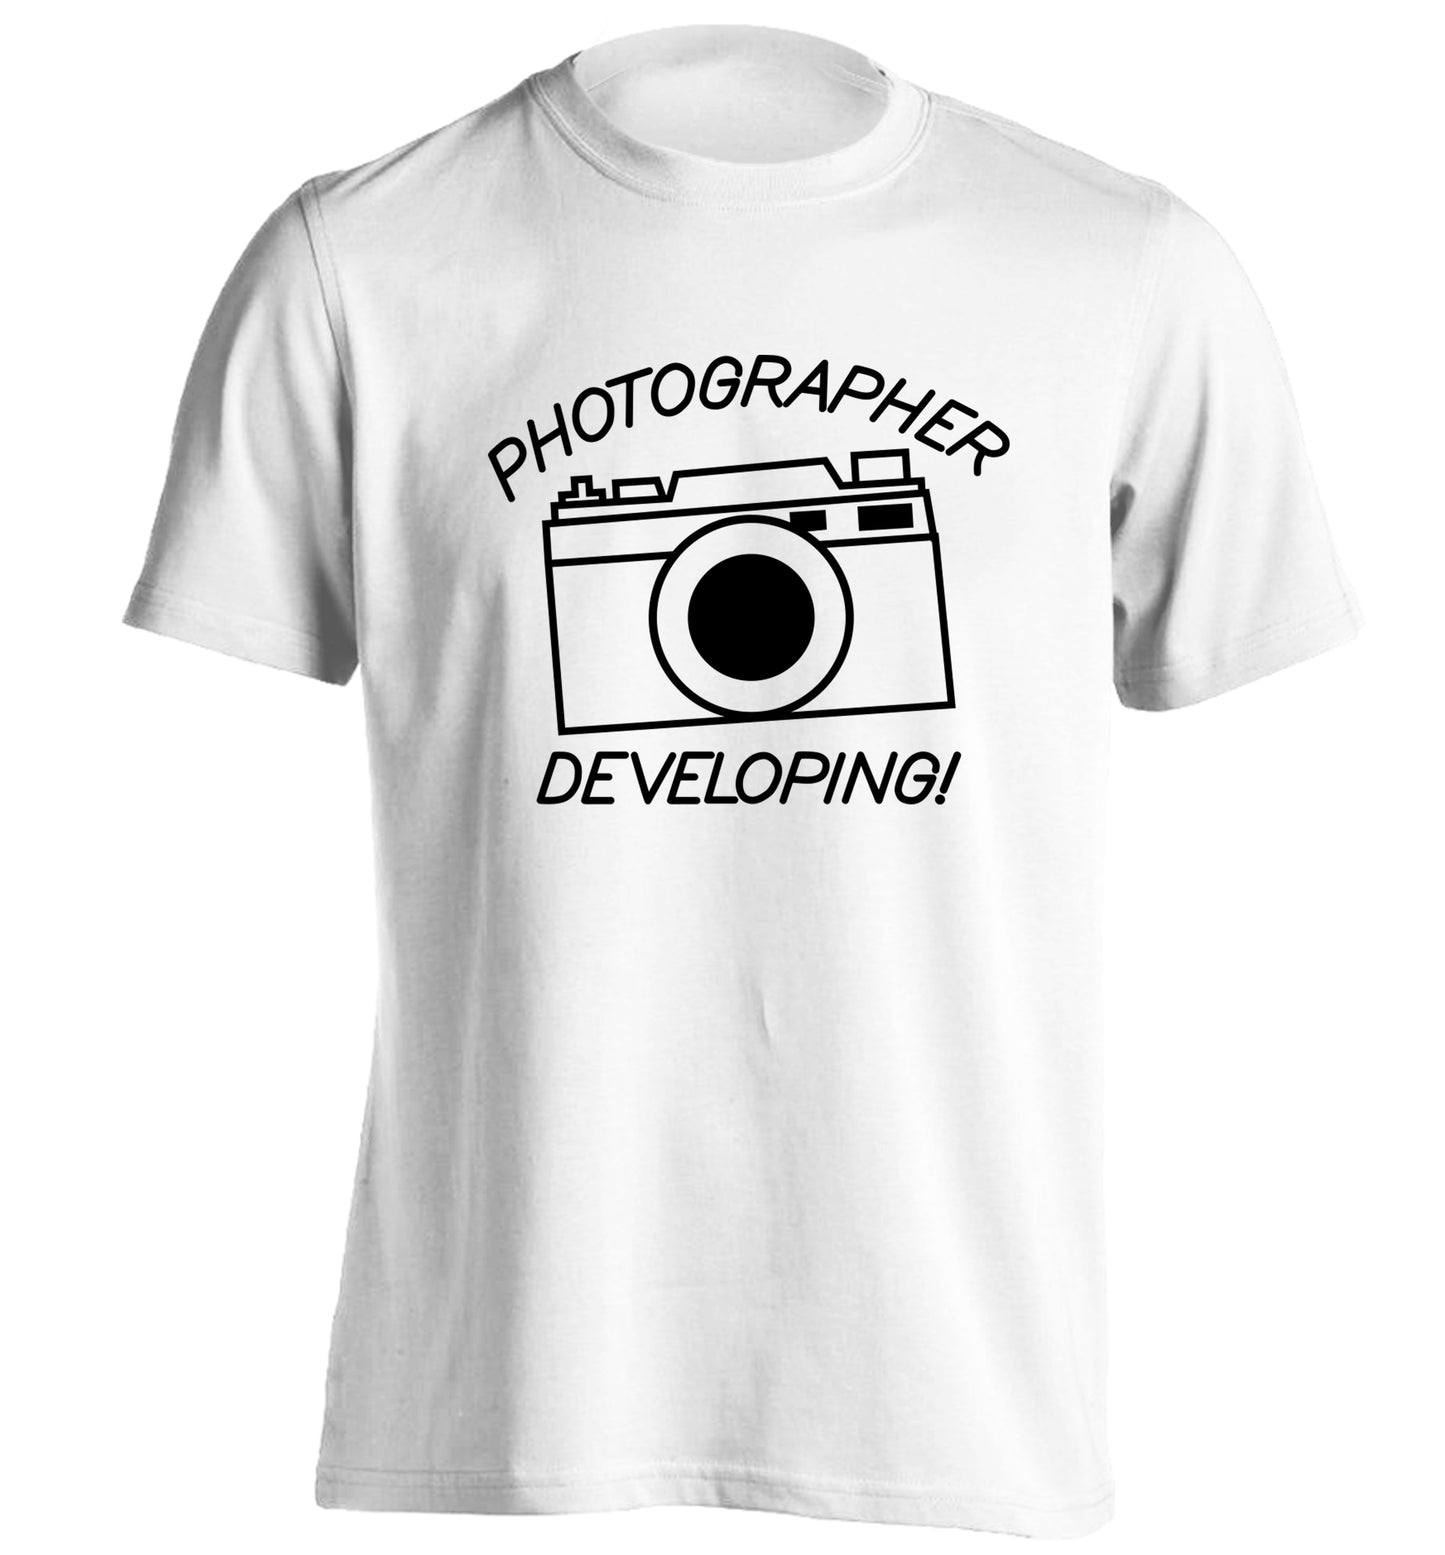 Photographer Developing  adults unisex white Tshirt 2XL